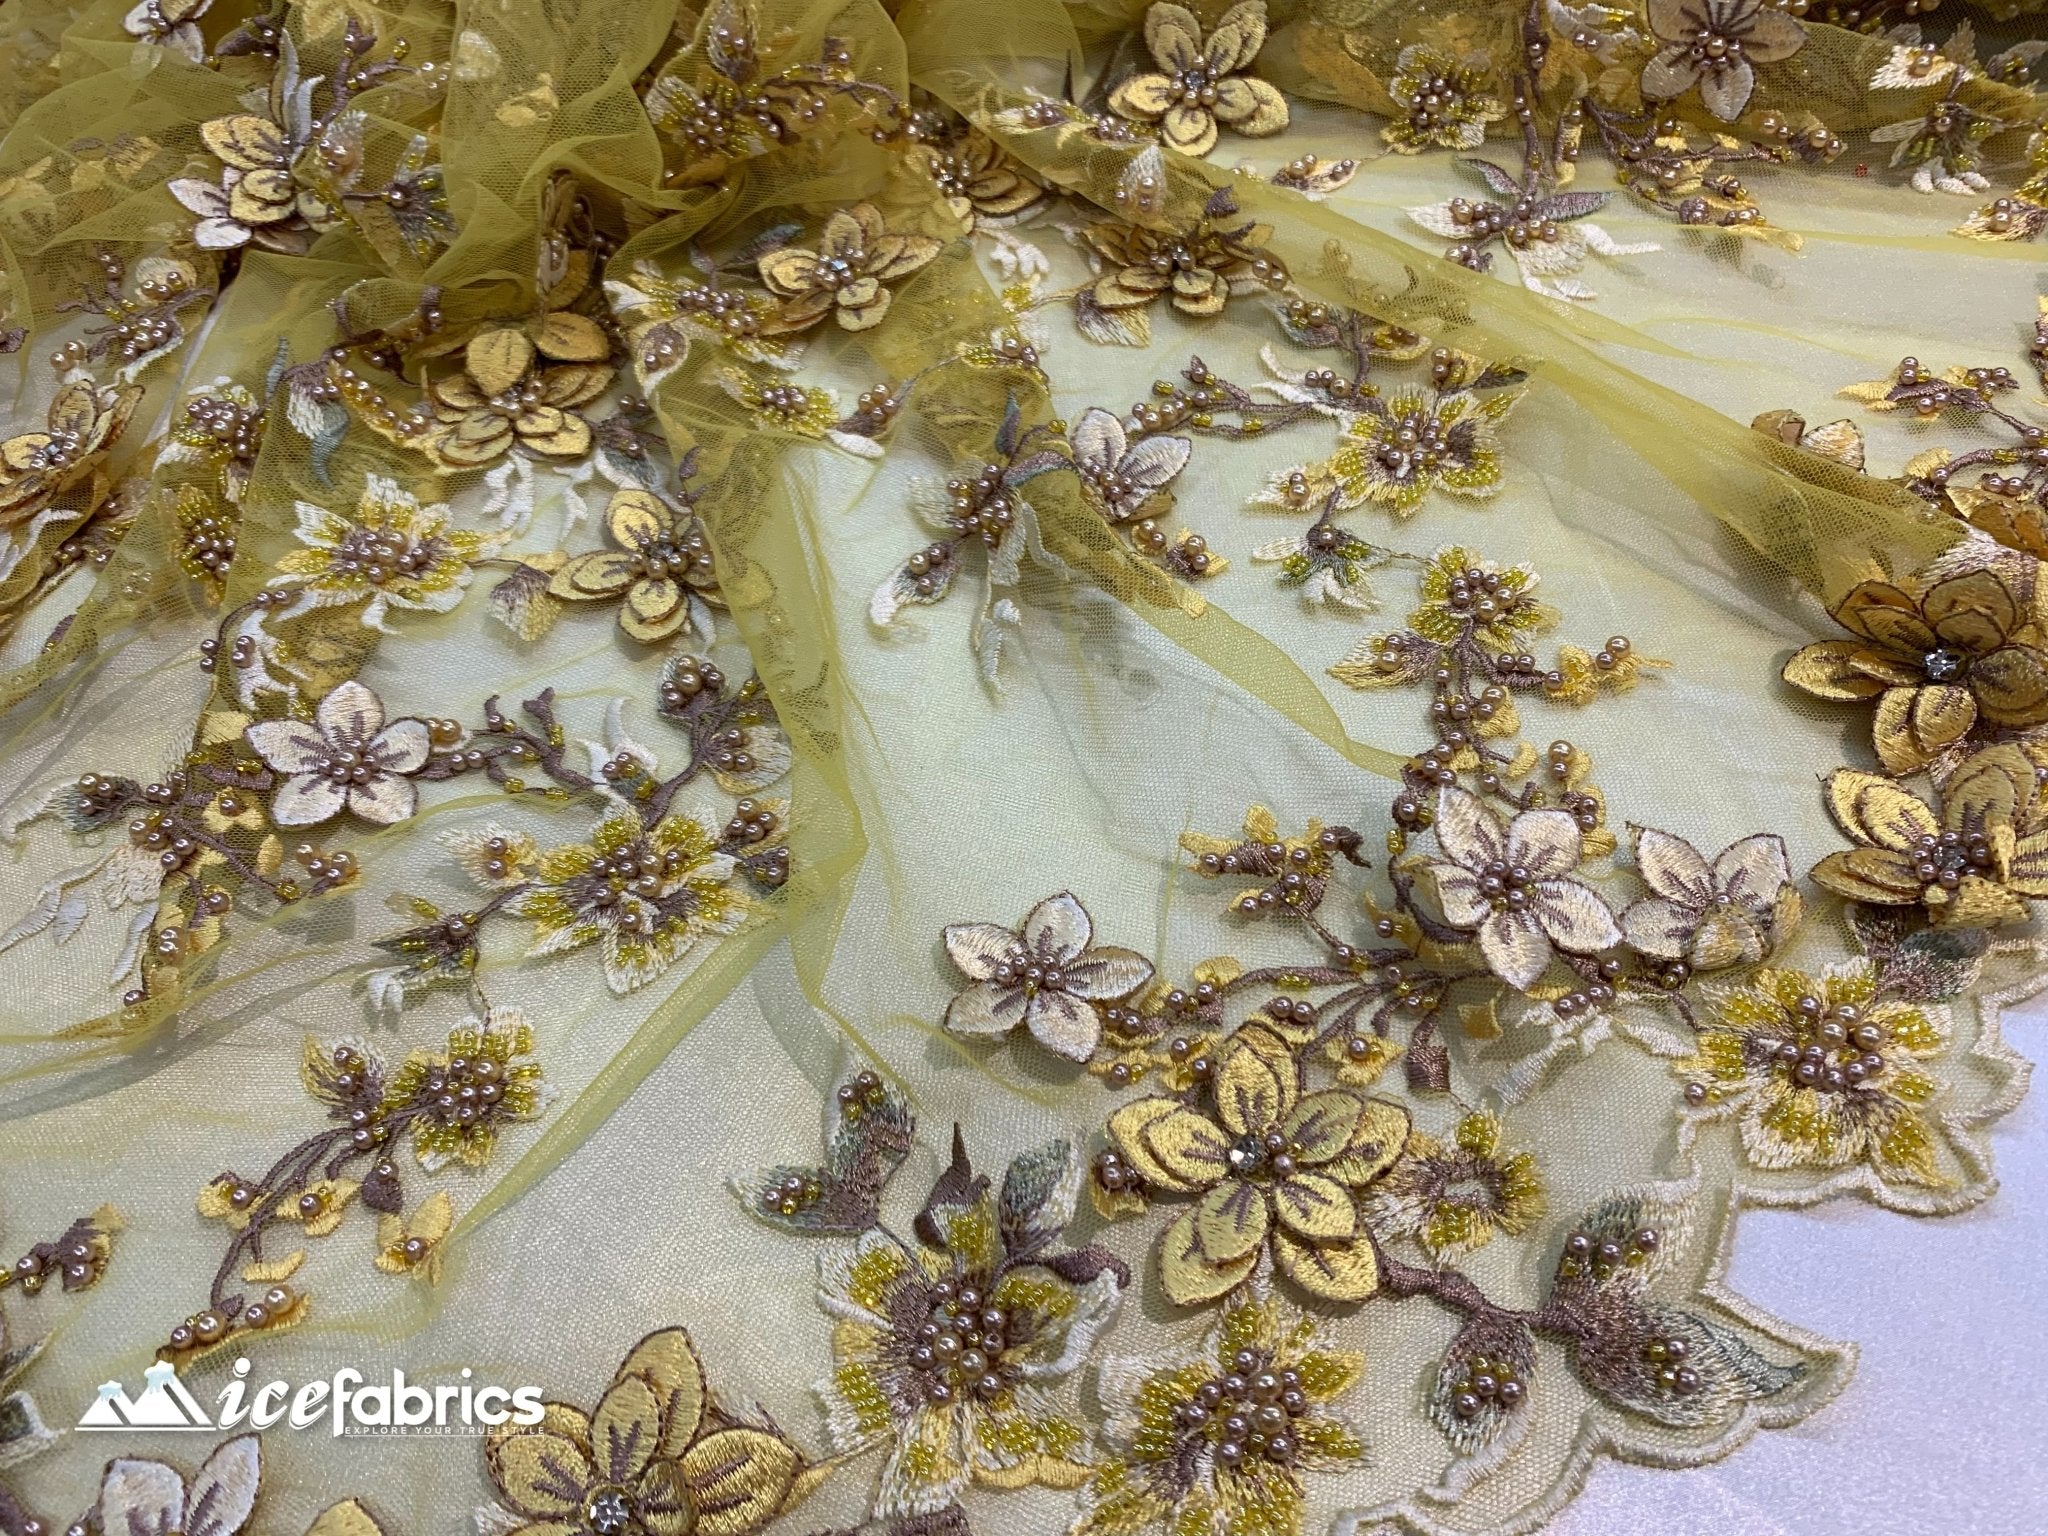 Embroidered Fabric/ 3D Flowers Beaded Fabric/ Lace Fabric/ YellowICE FABRICSICE FABRICSYellowEmbroidered Fabric/ 3D Flowers Beaded Fabric/ Lace Fabric/ Yellow ICE FABRICS